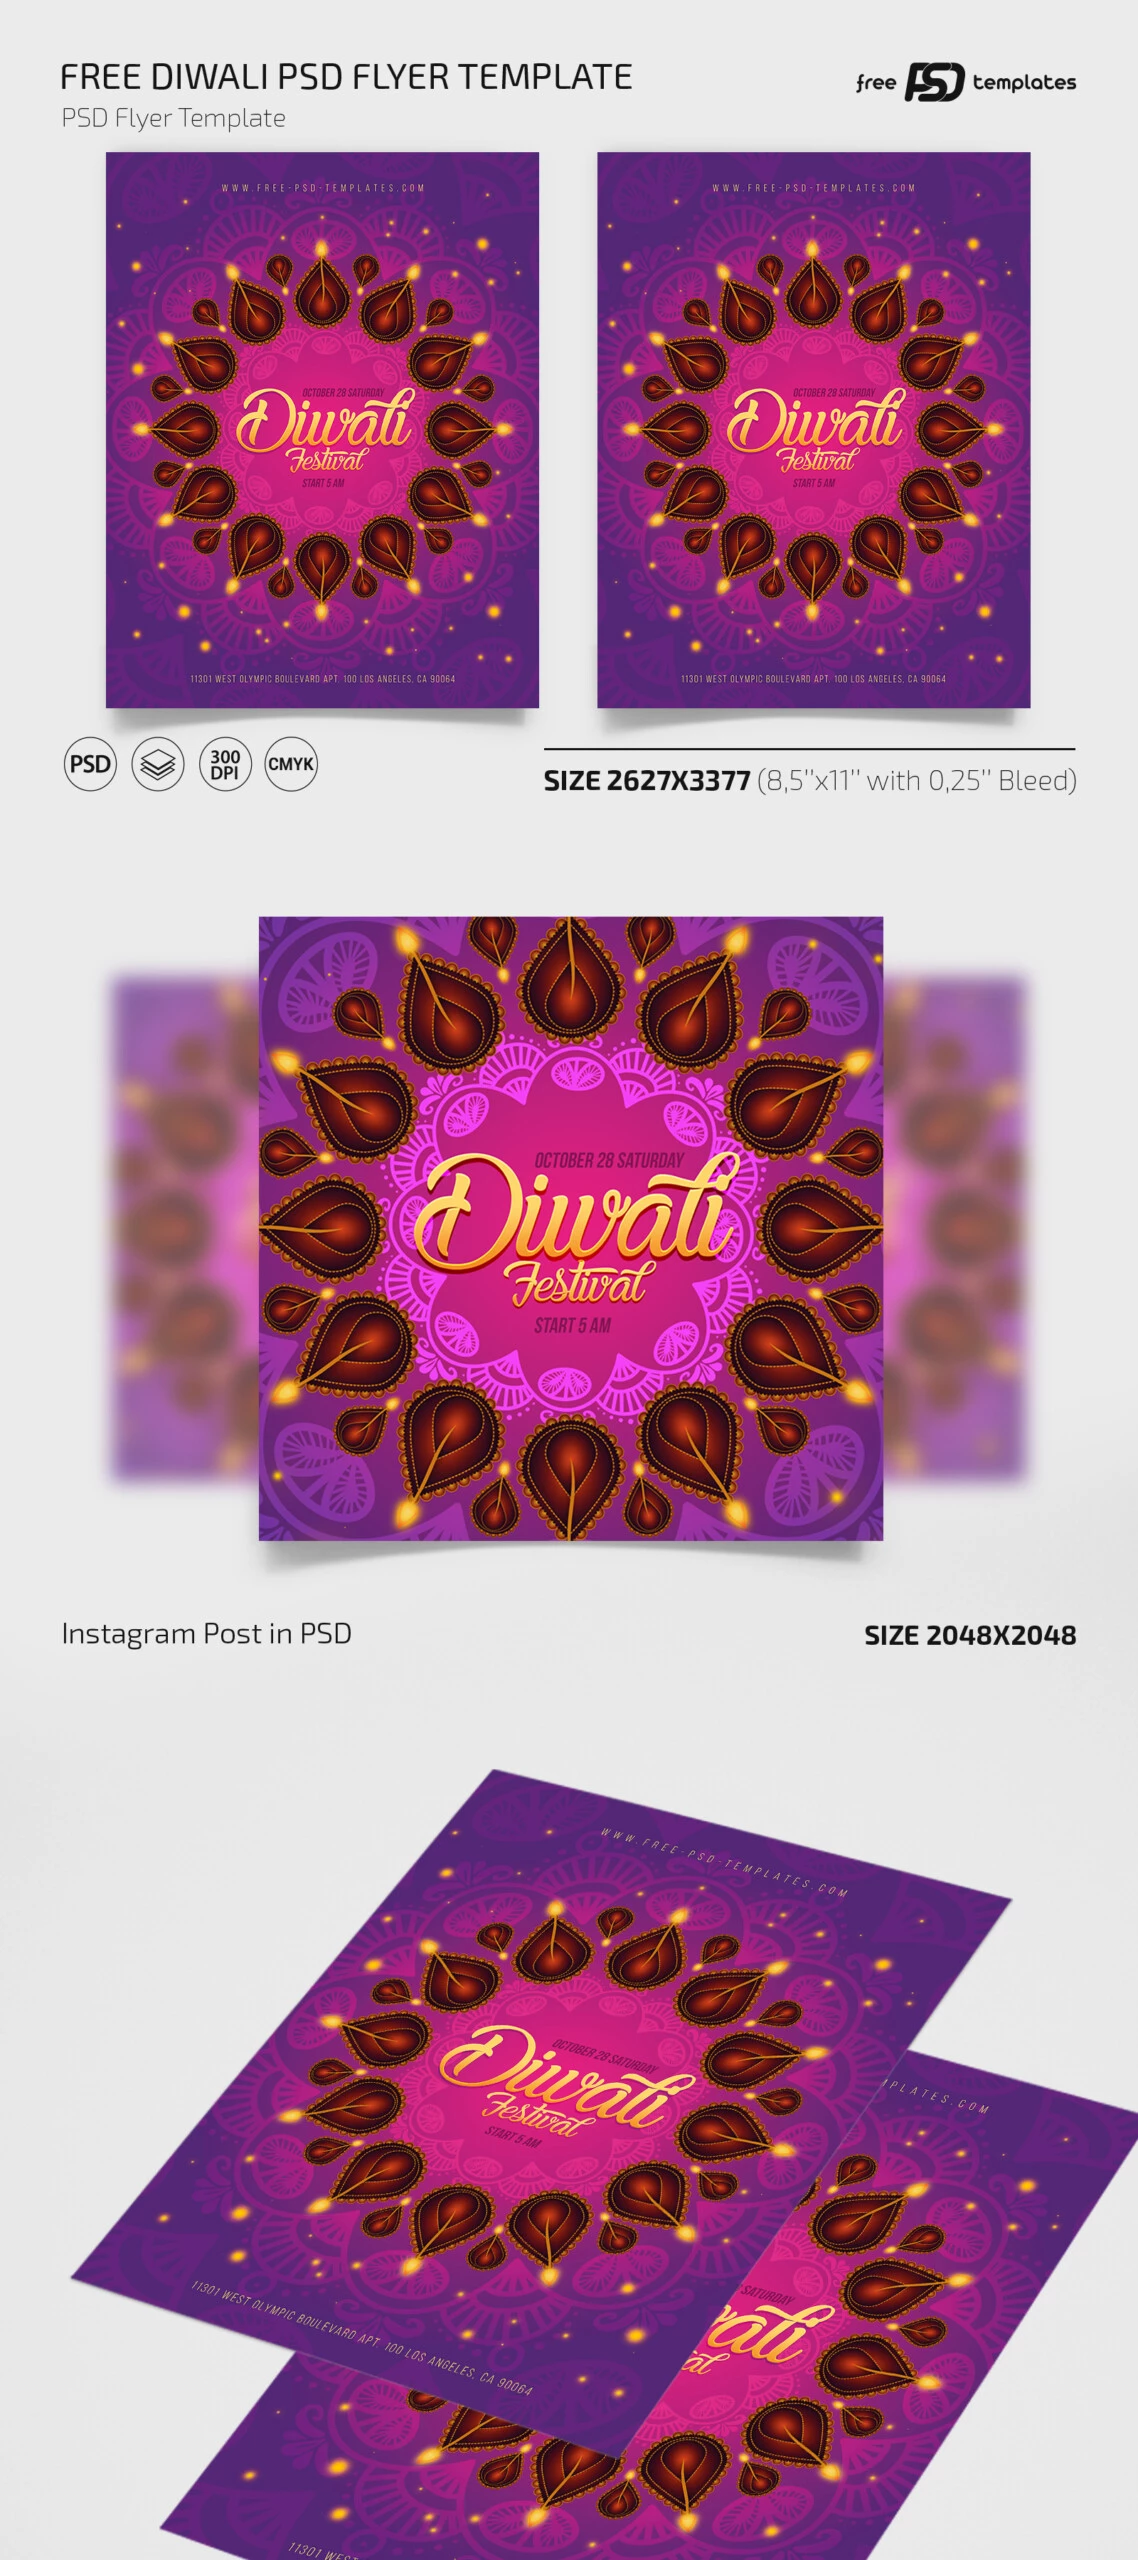 Free Diwali Festival Flyer PSD Template